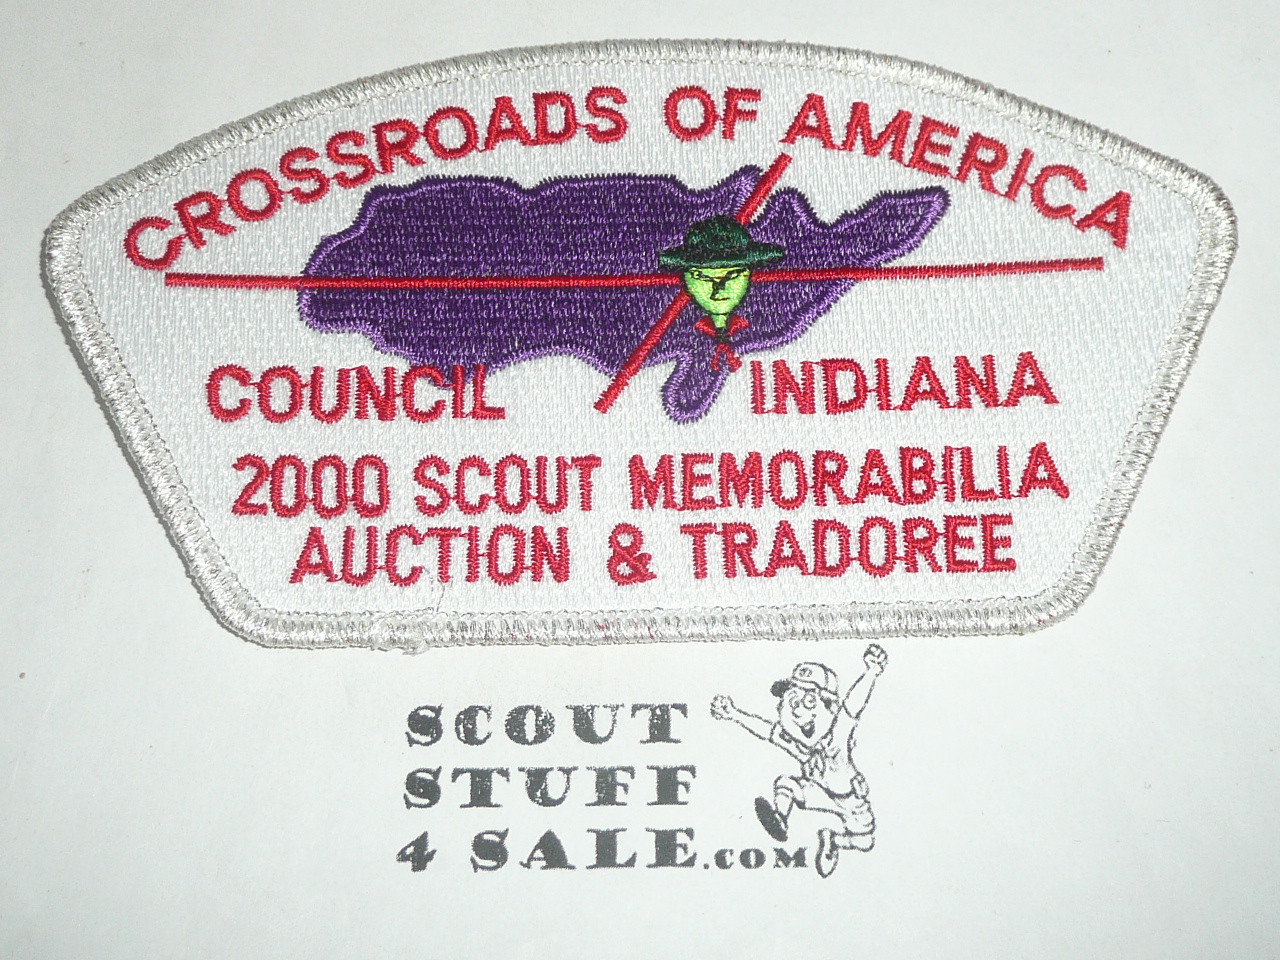 Crossroads of America Council sa36 CSP - Scout